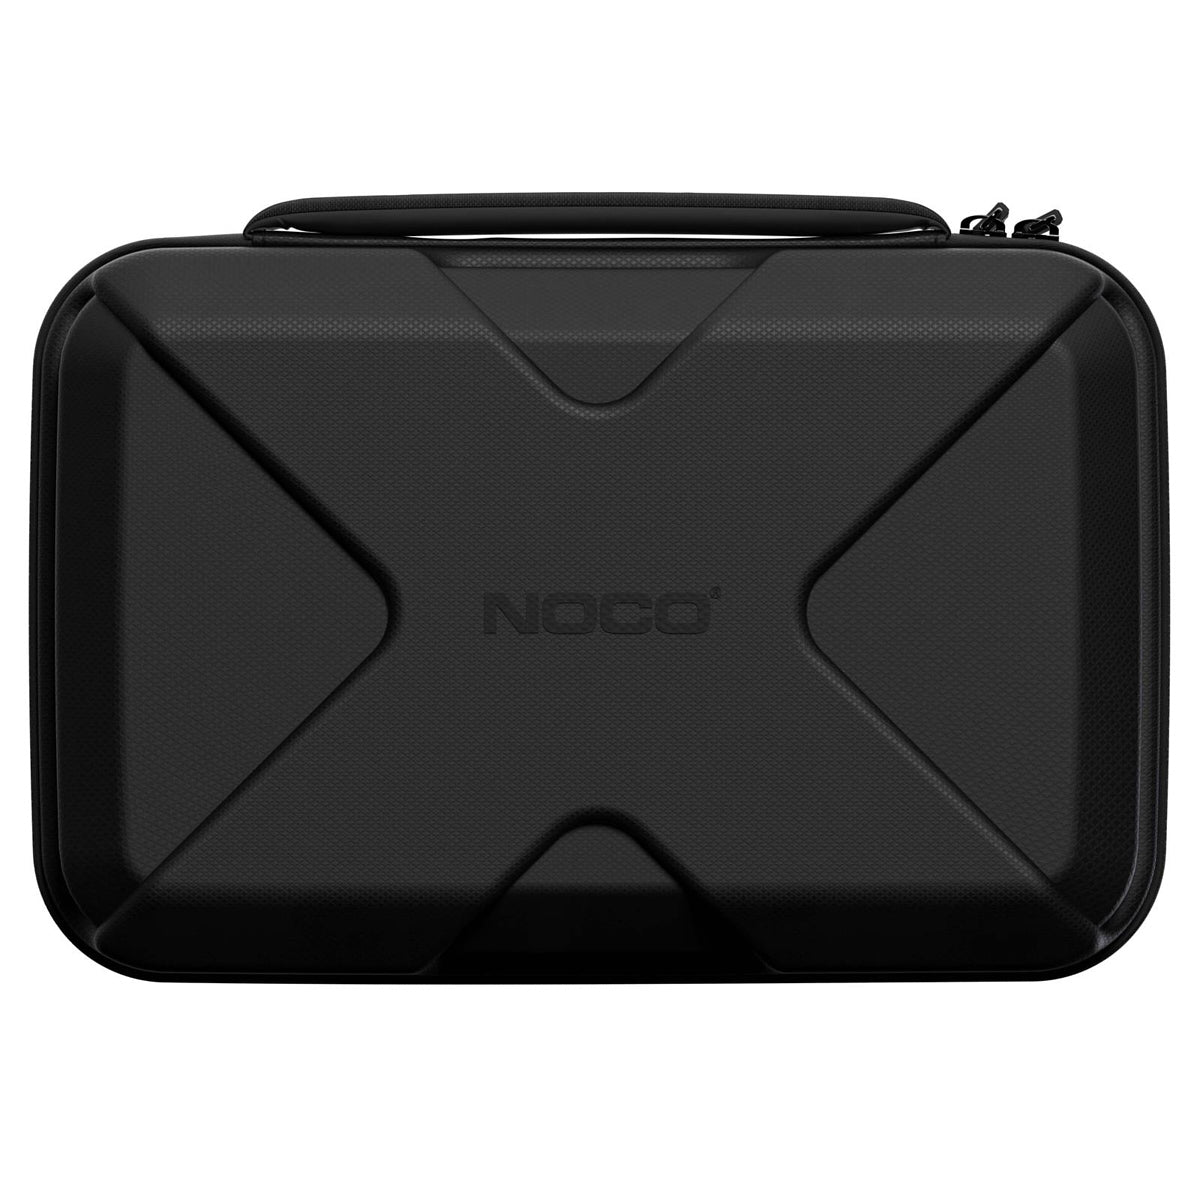 NOCO Case Protection GBX155 NOCGBC104